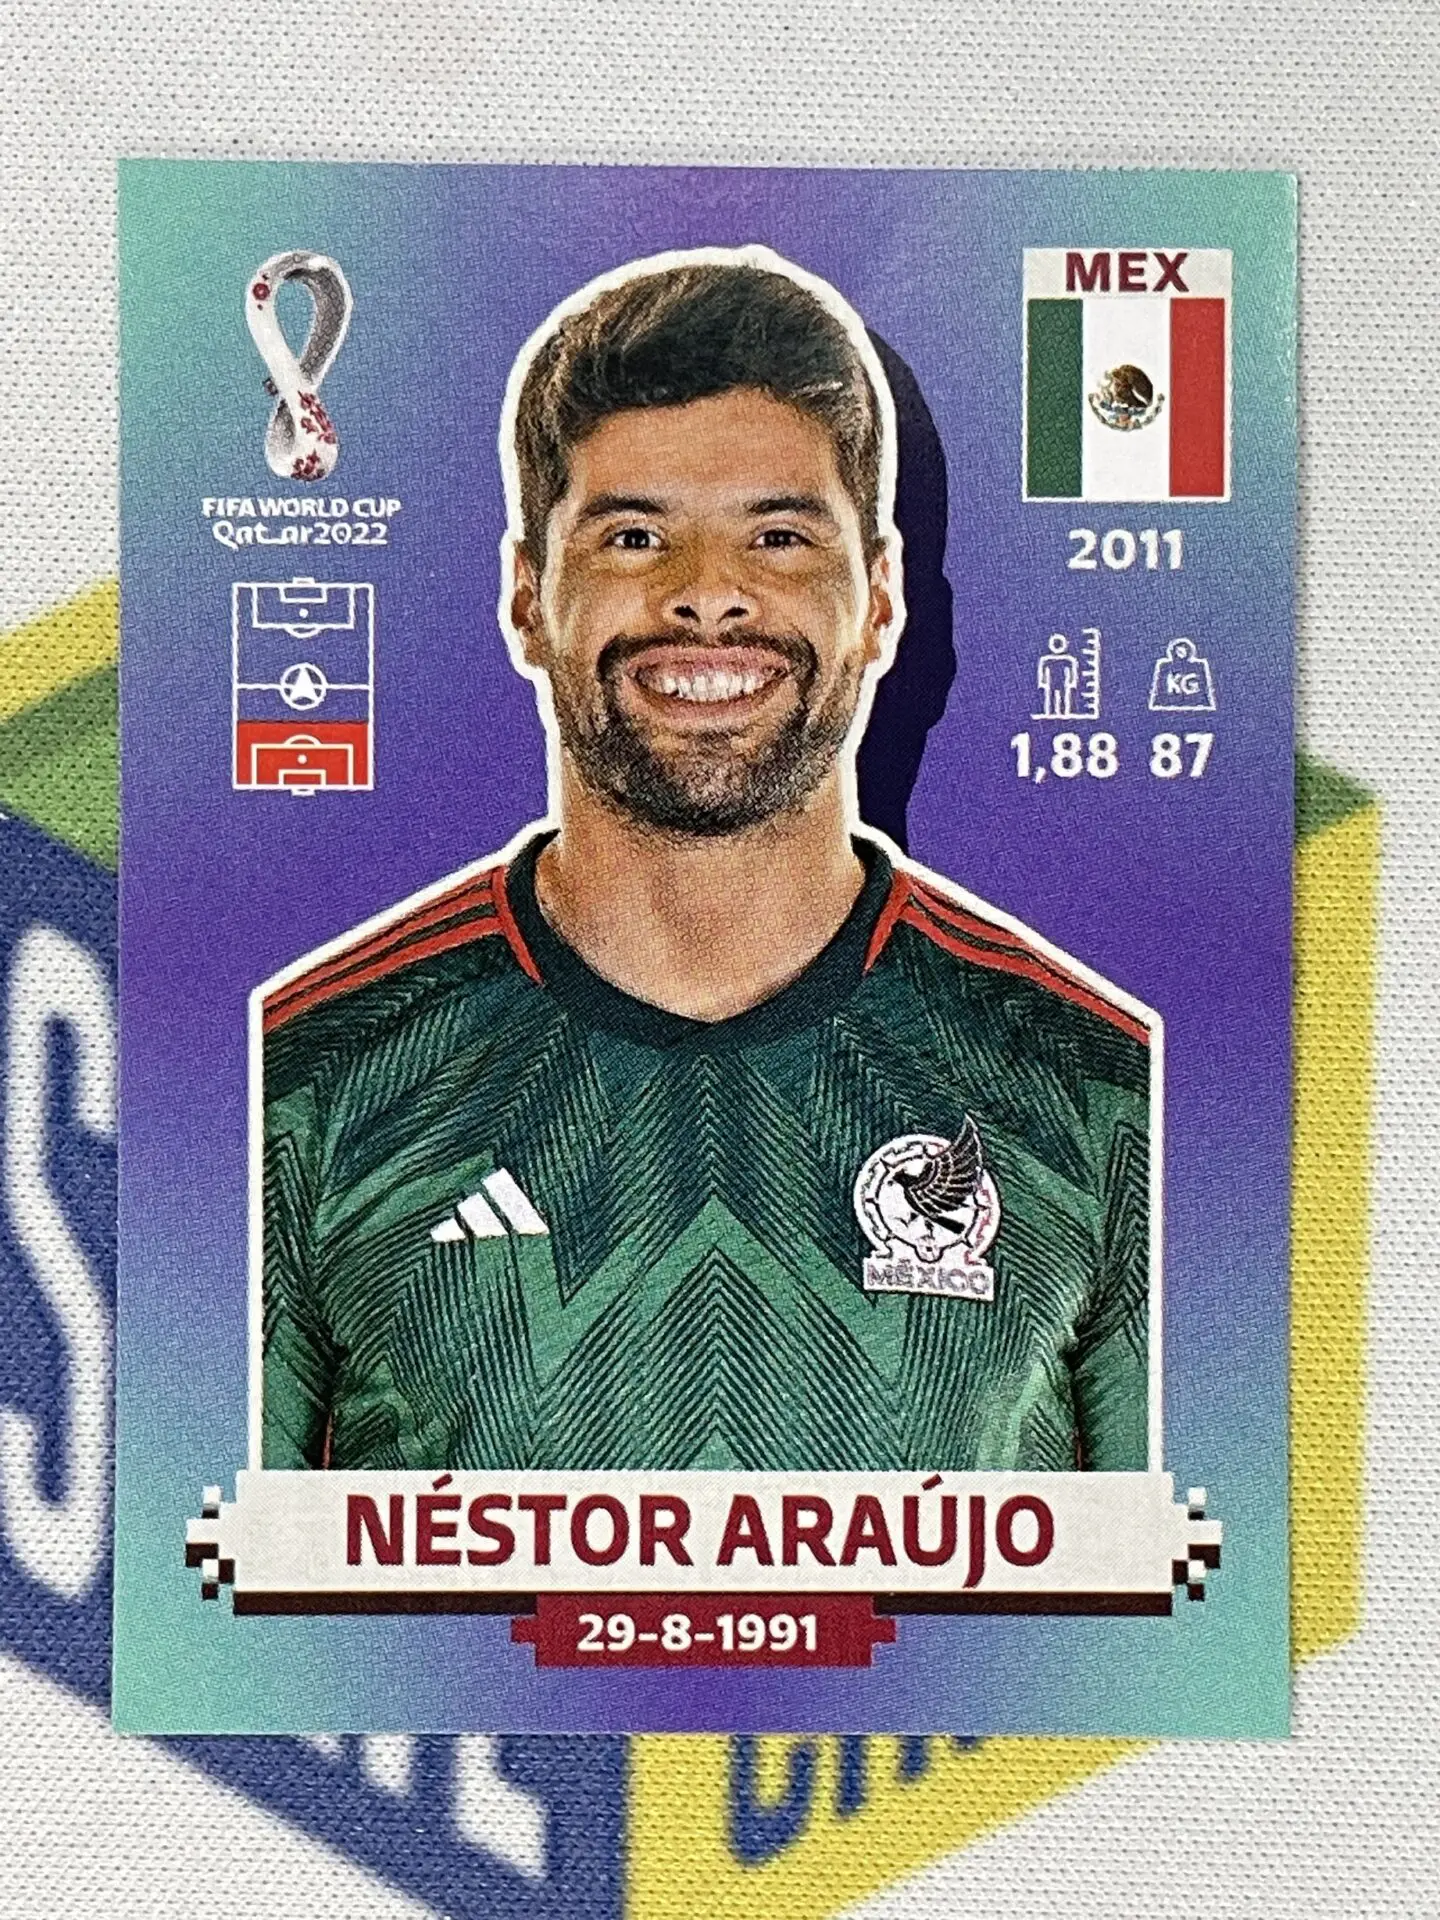 MEX5 Néstor Araújo (Mexico) Panini World Cup 2022 Sticker